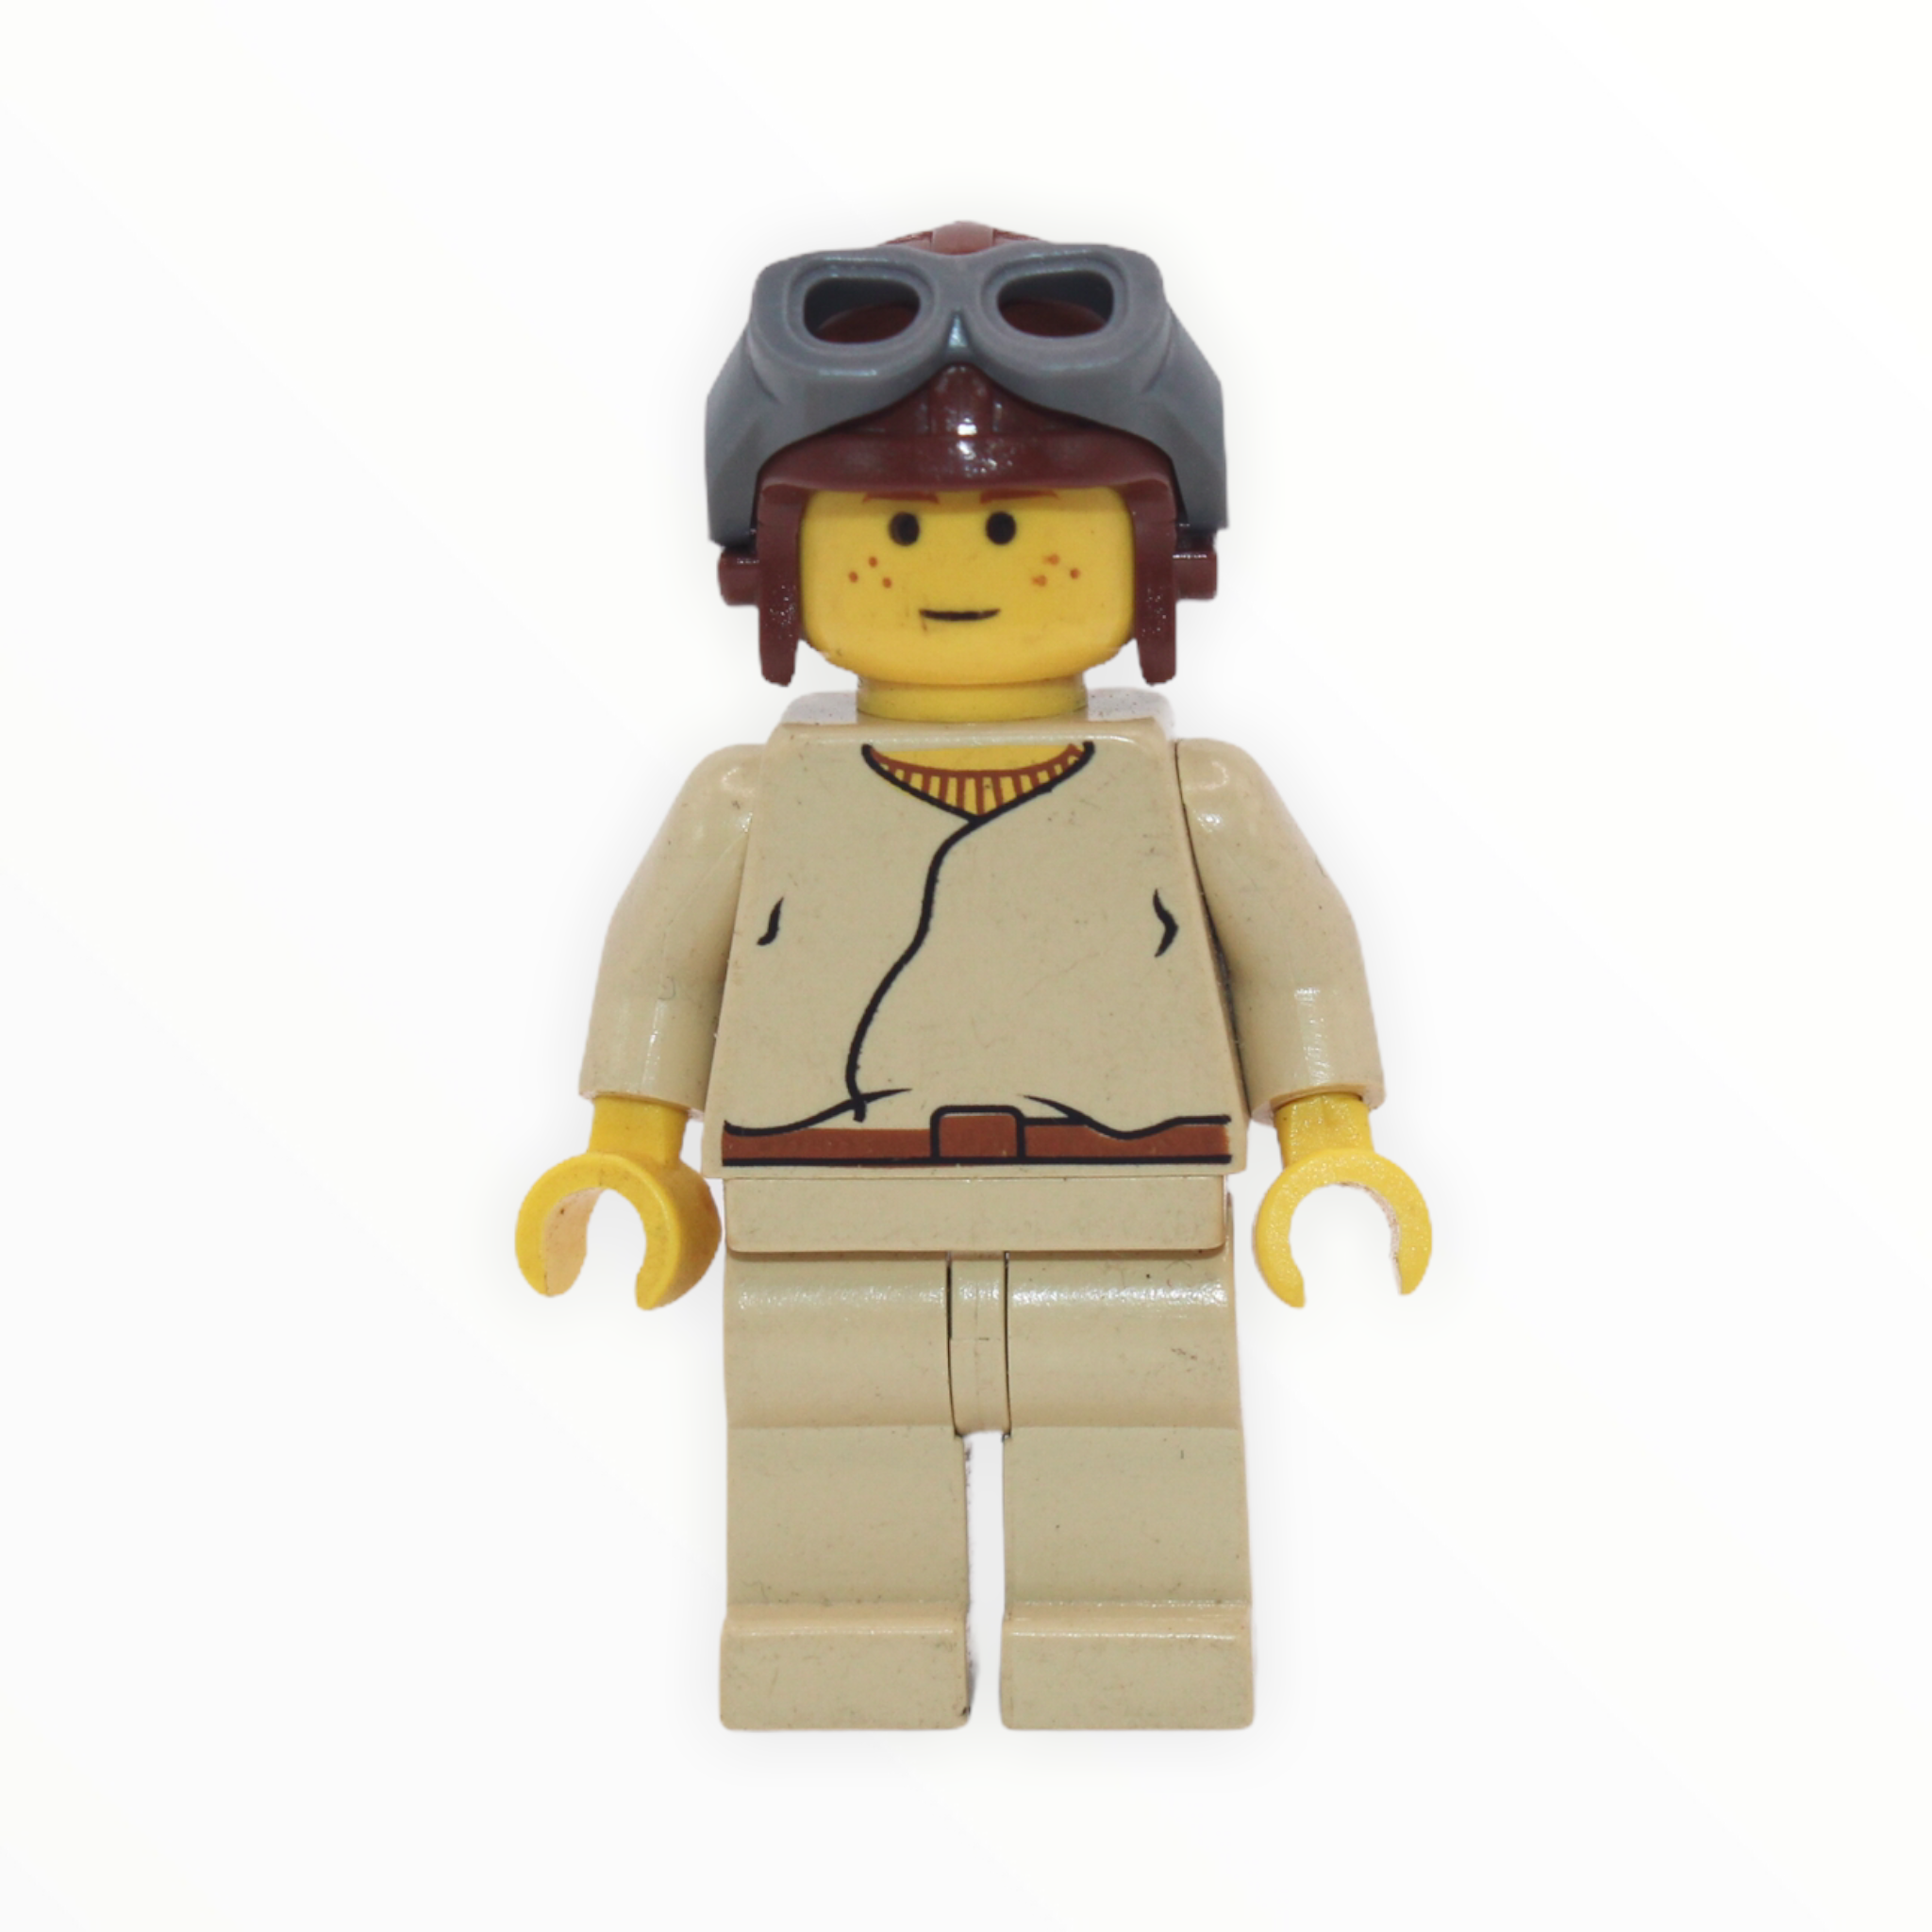 Anakin Skywalker (young, brown aviator cap, 1999, yellow skin)